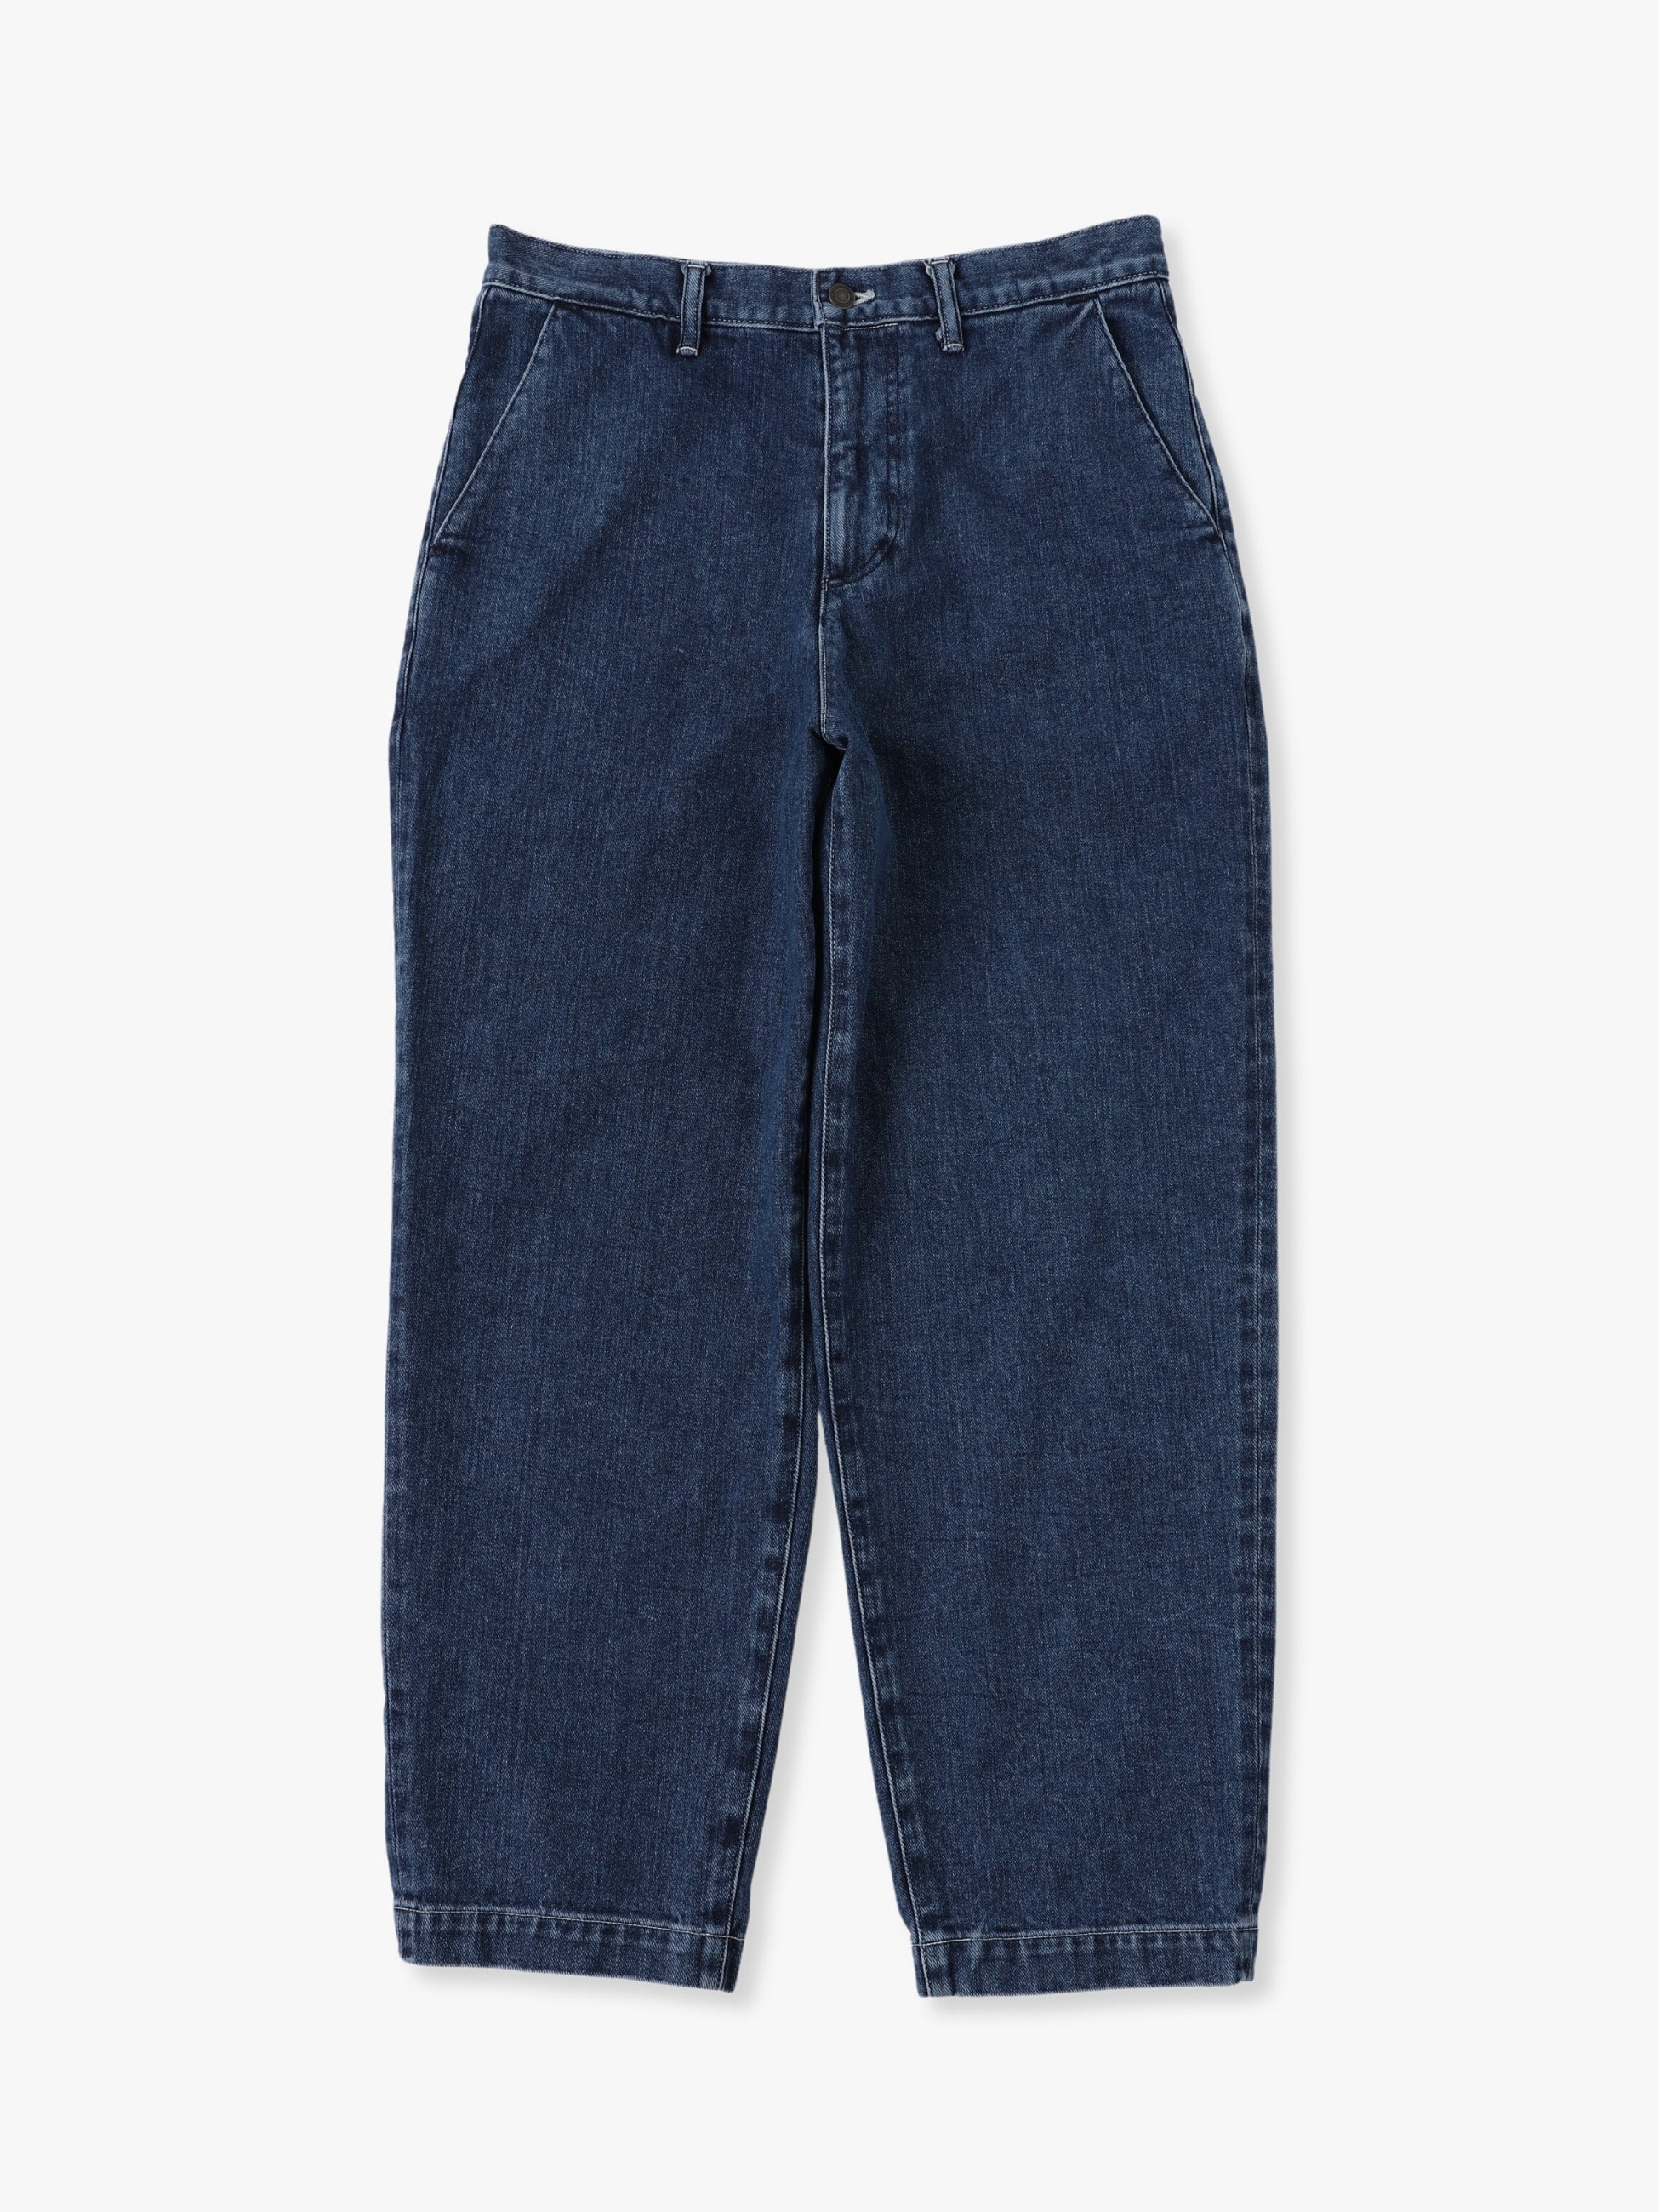 DESCENDANT ロンハーマン buggy jeans - デニム/ジーンズ